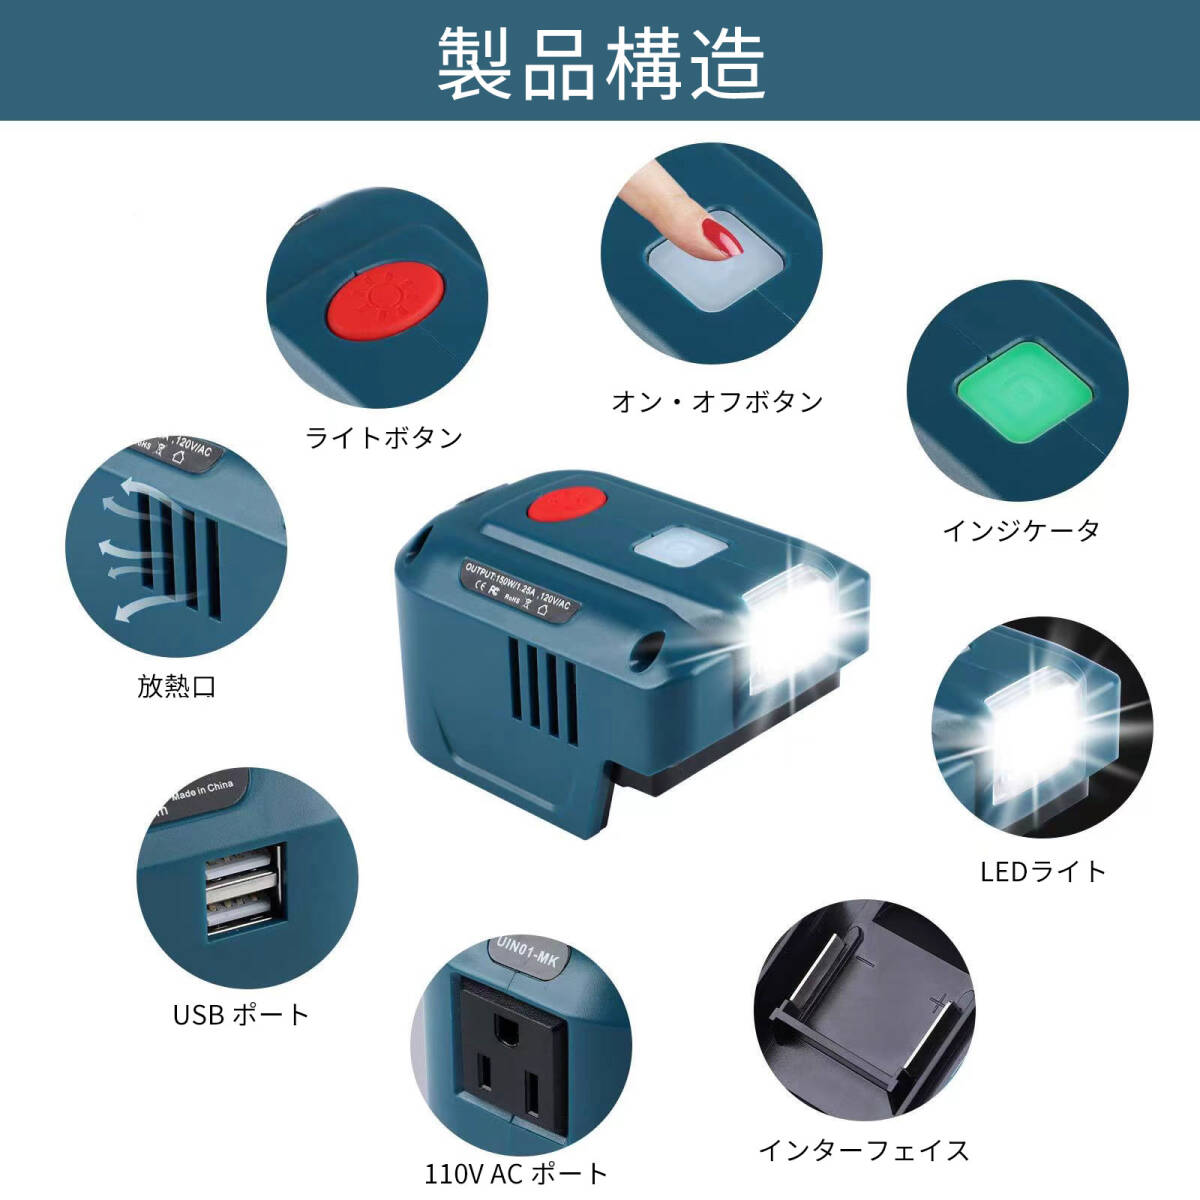 (B) マキタ makita 互換 インバーター ポータブル電源 アダプター AC電源 USB LED ライト付 18V バッテリー モバイル 非常時 100V 家庭用の画像6